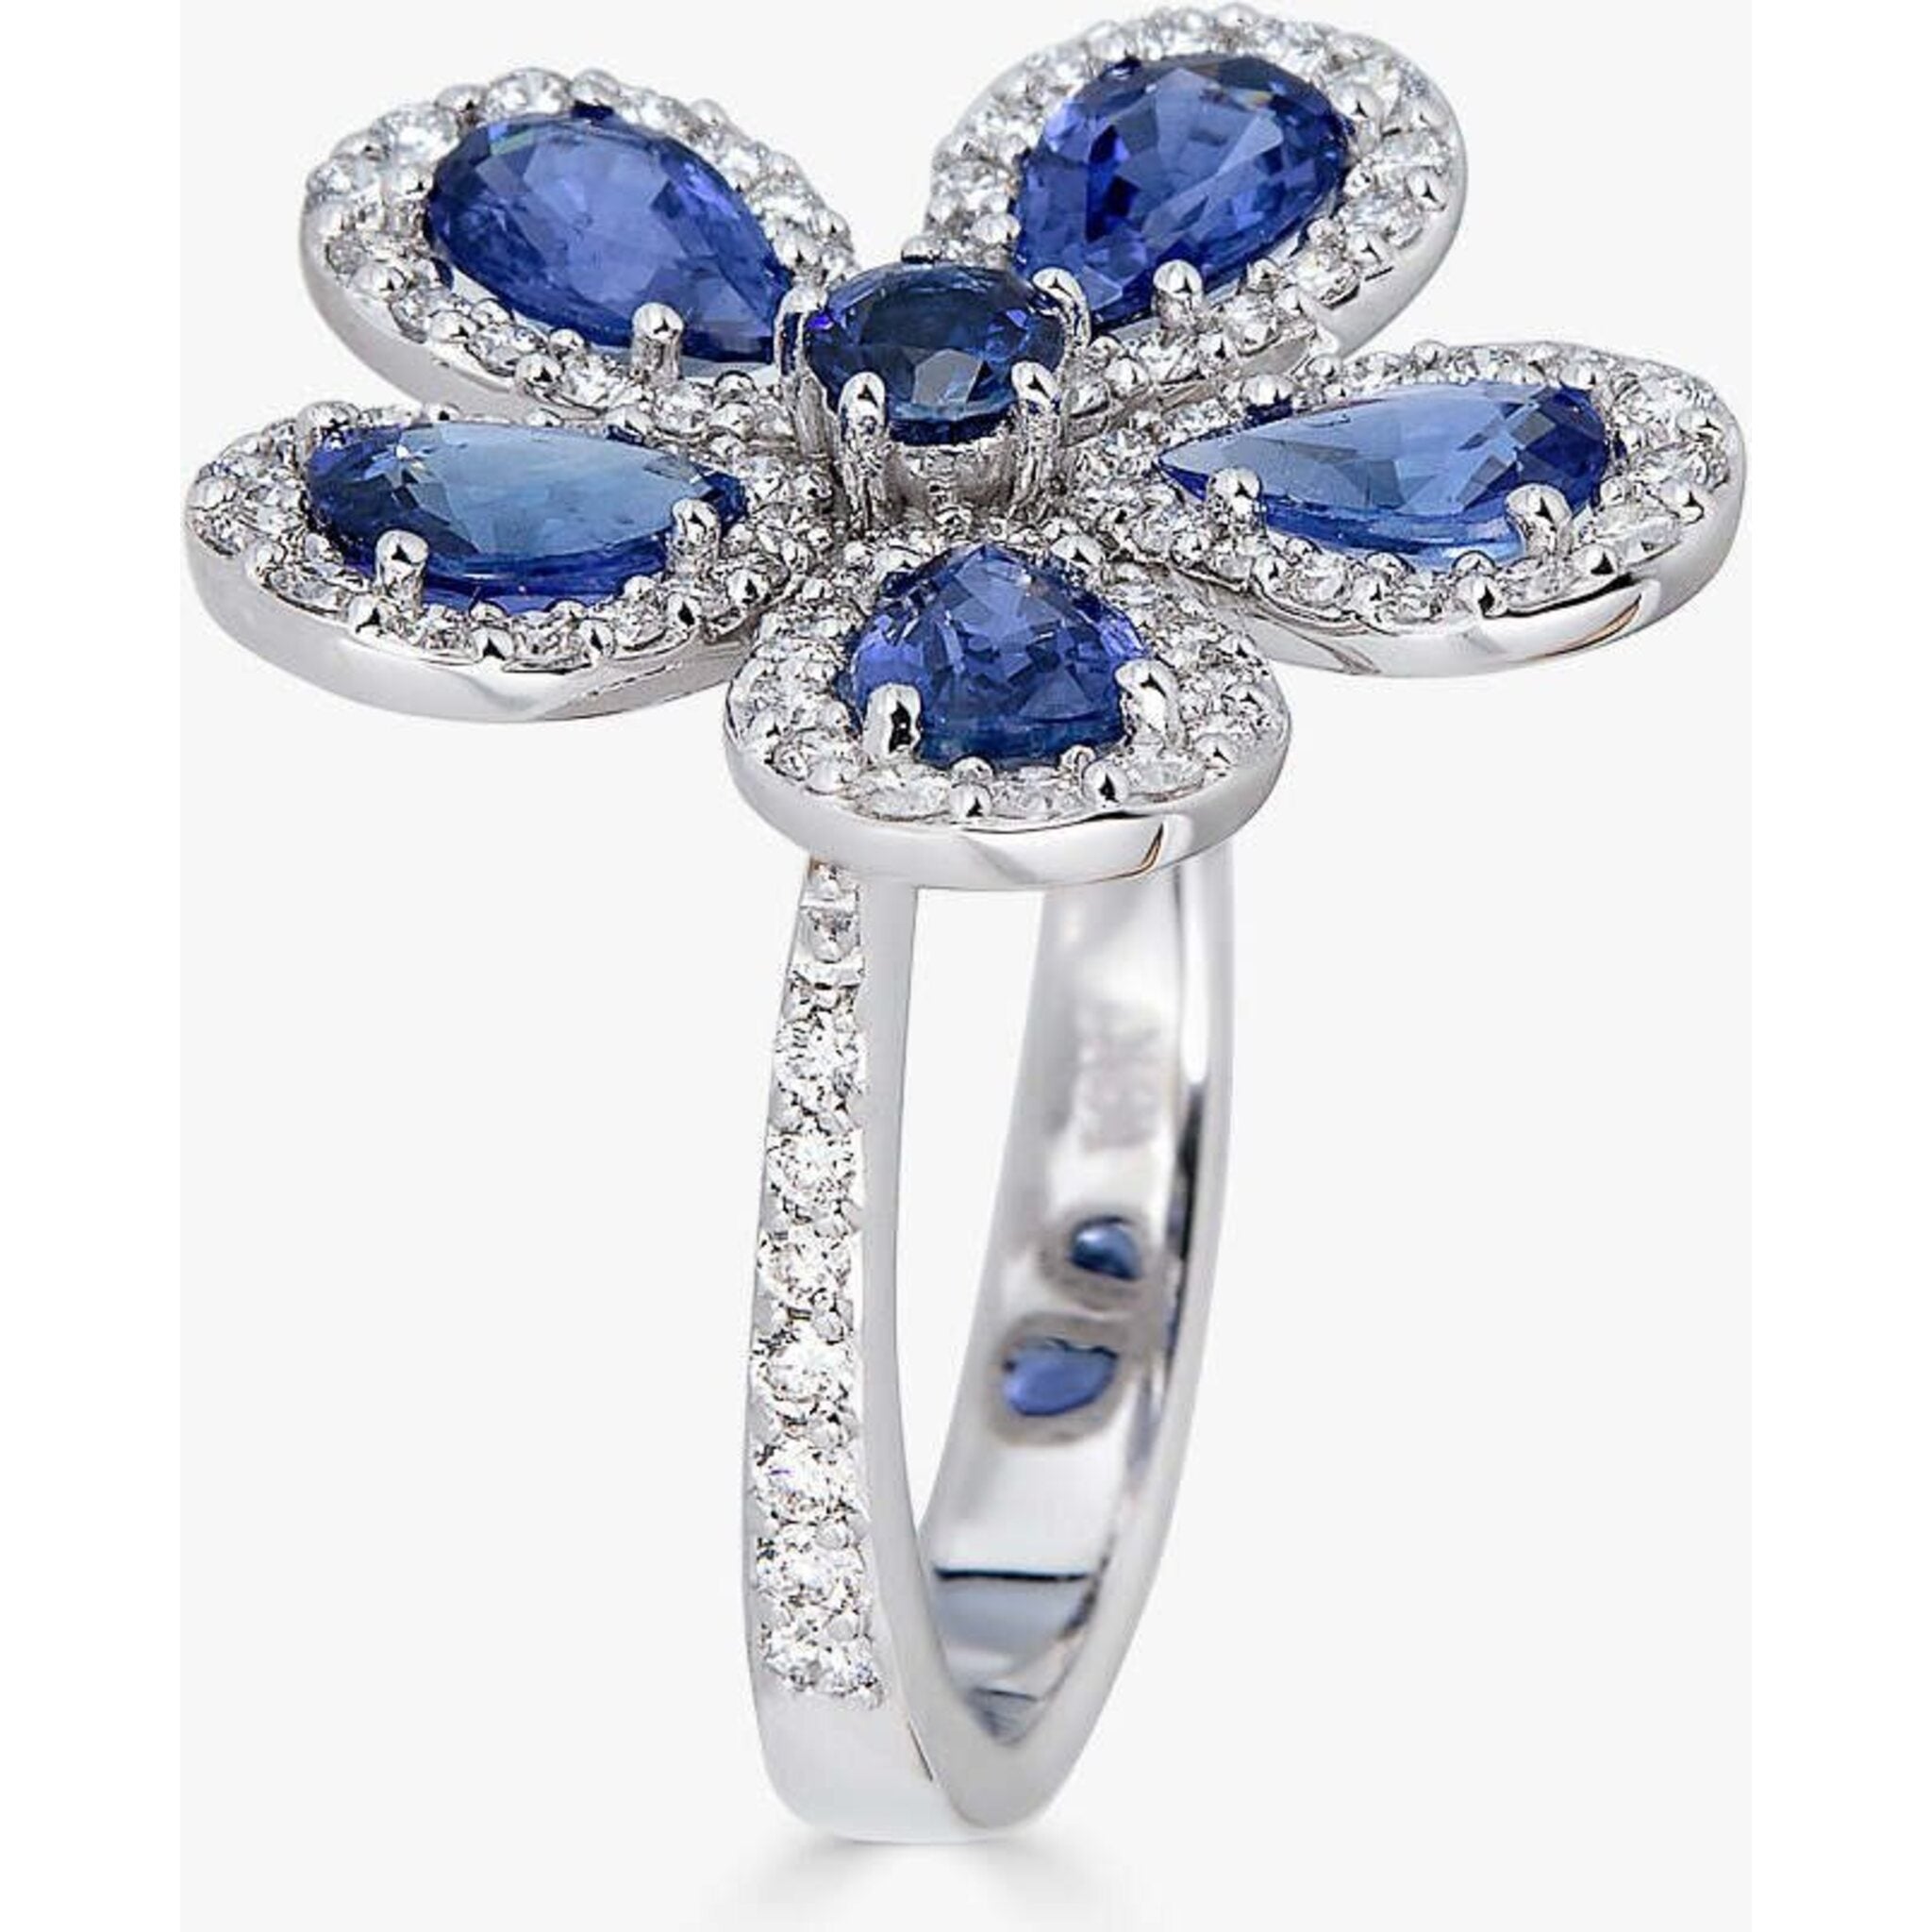 Piranesi - Classic Flower Ring in Blue Sapphire - 18K White Gold